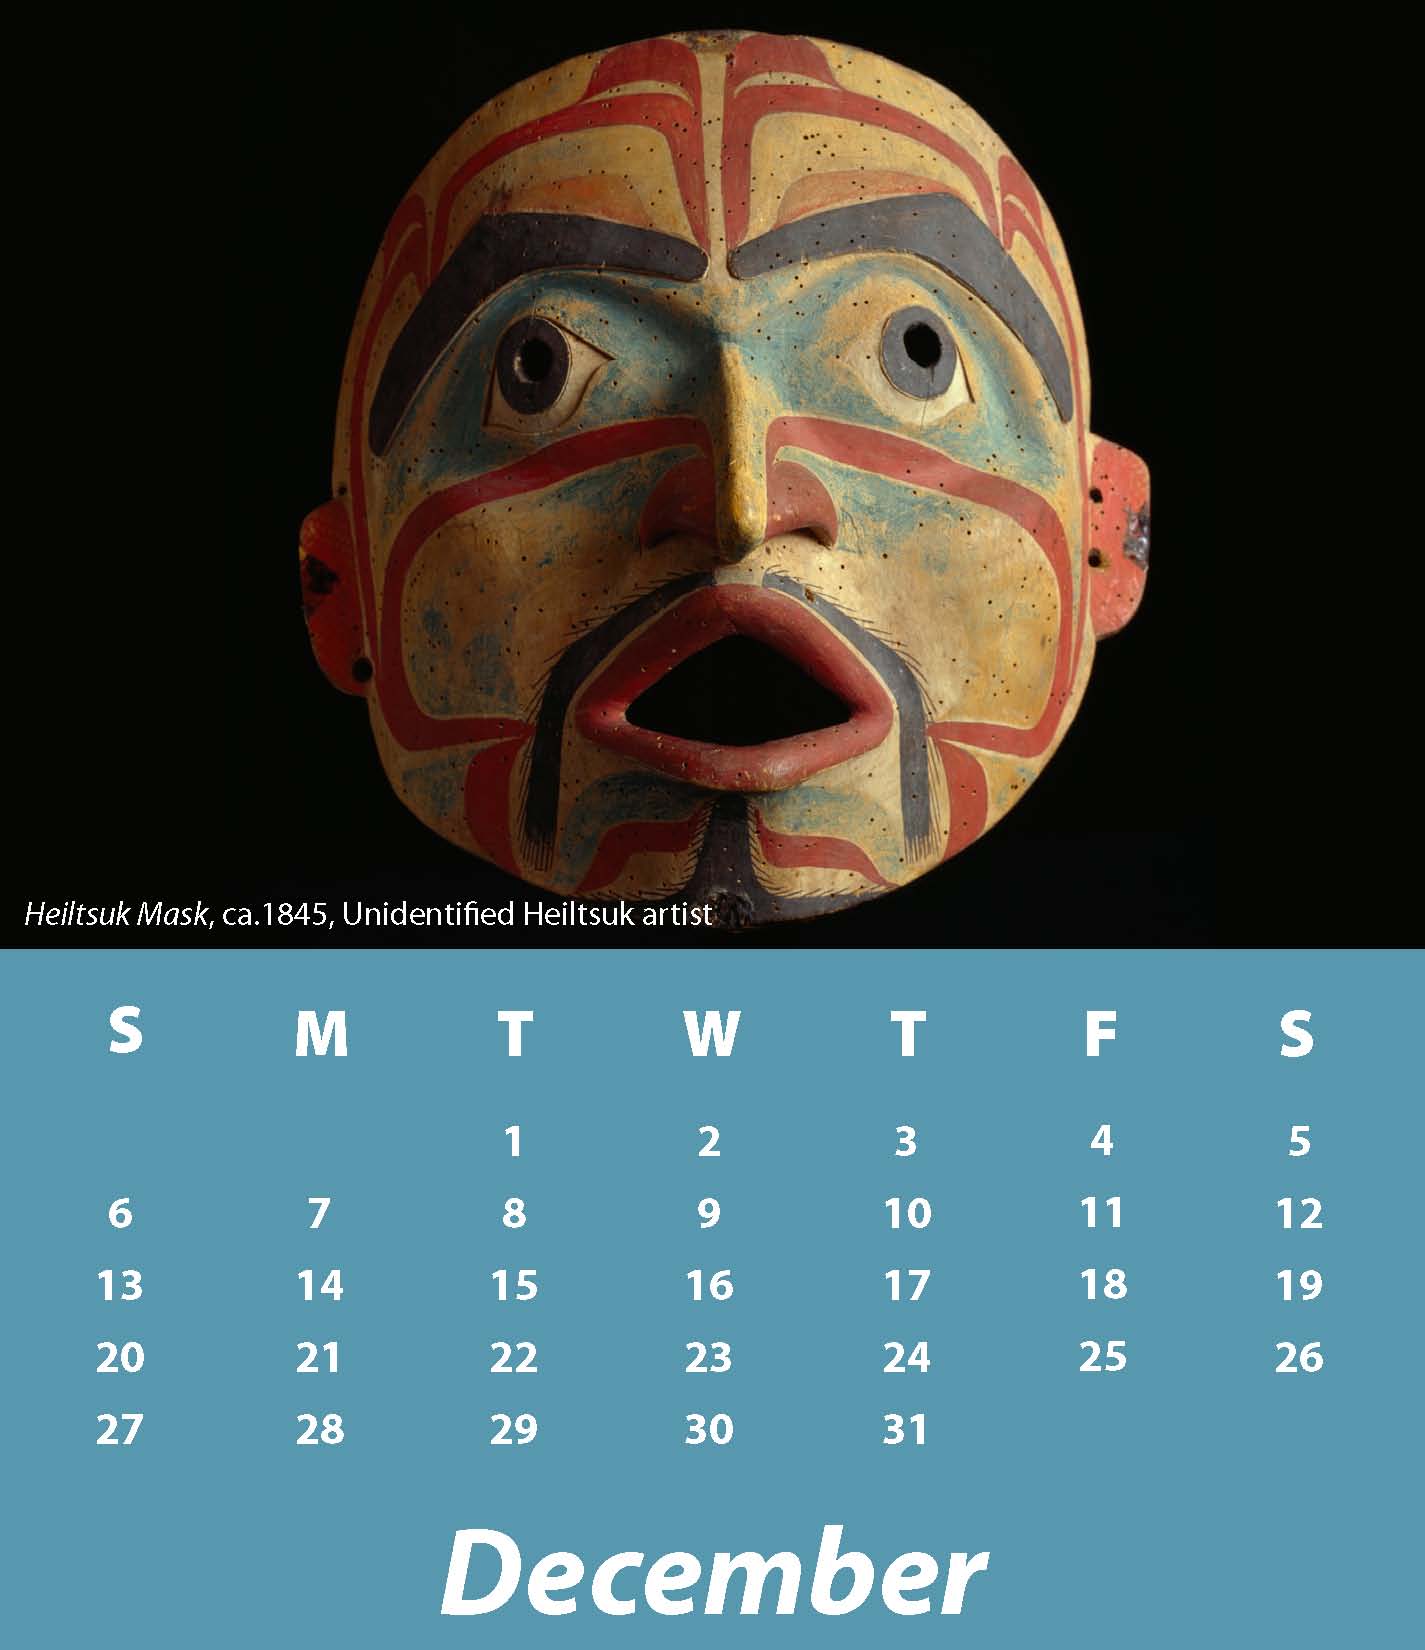 a December calendar with the image Heiltsuk Mask